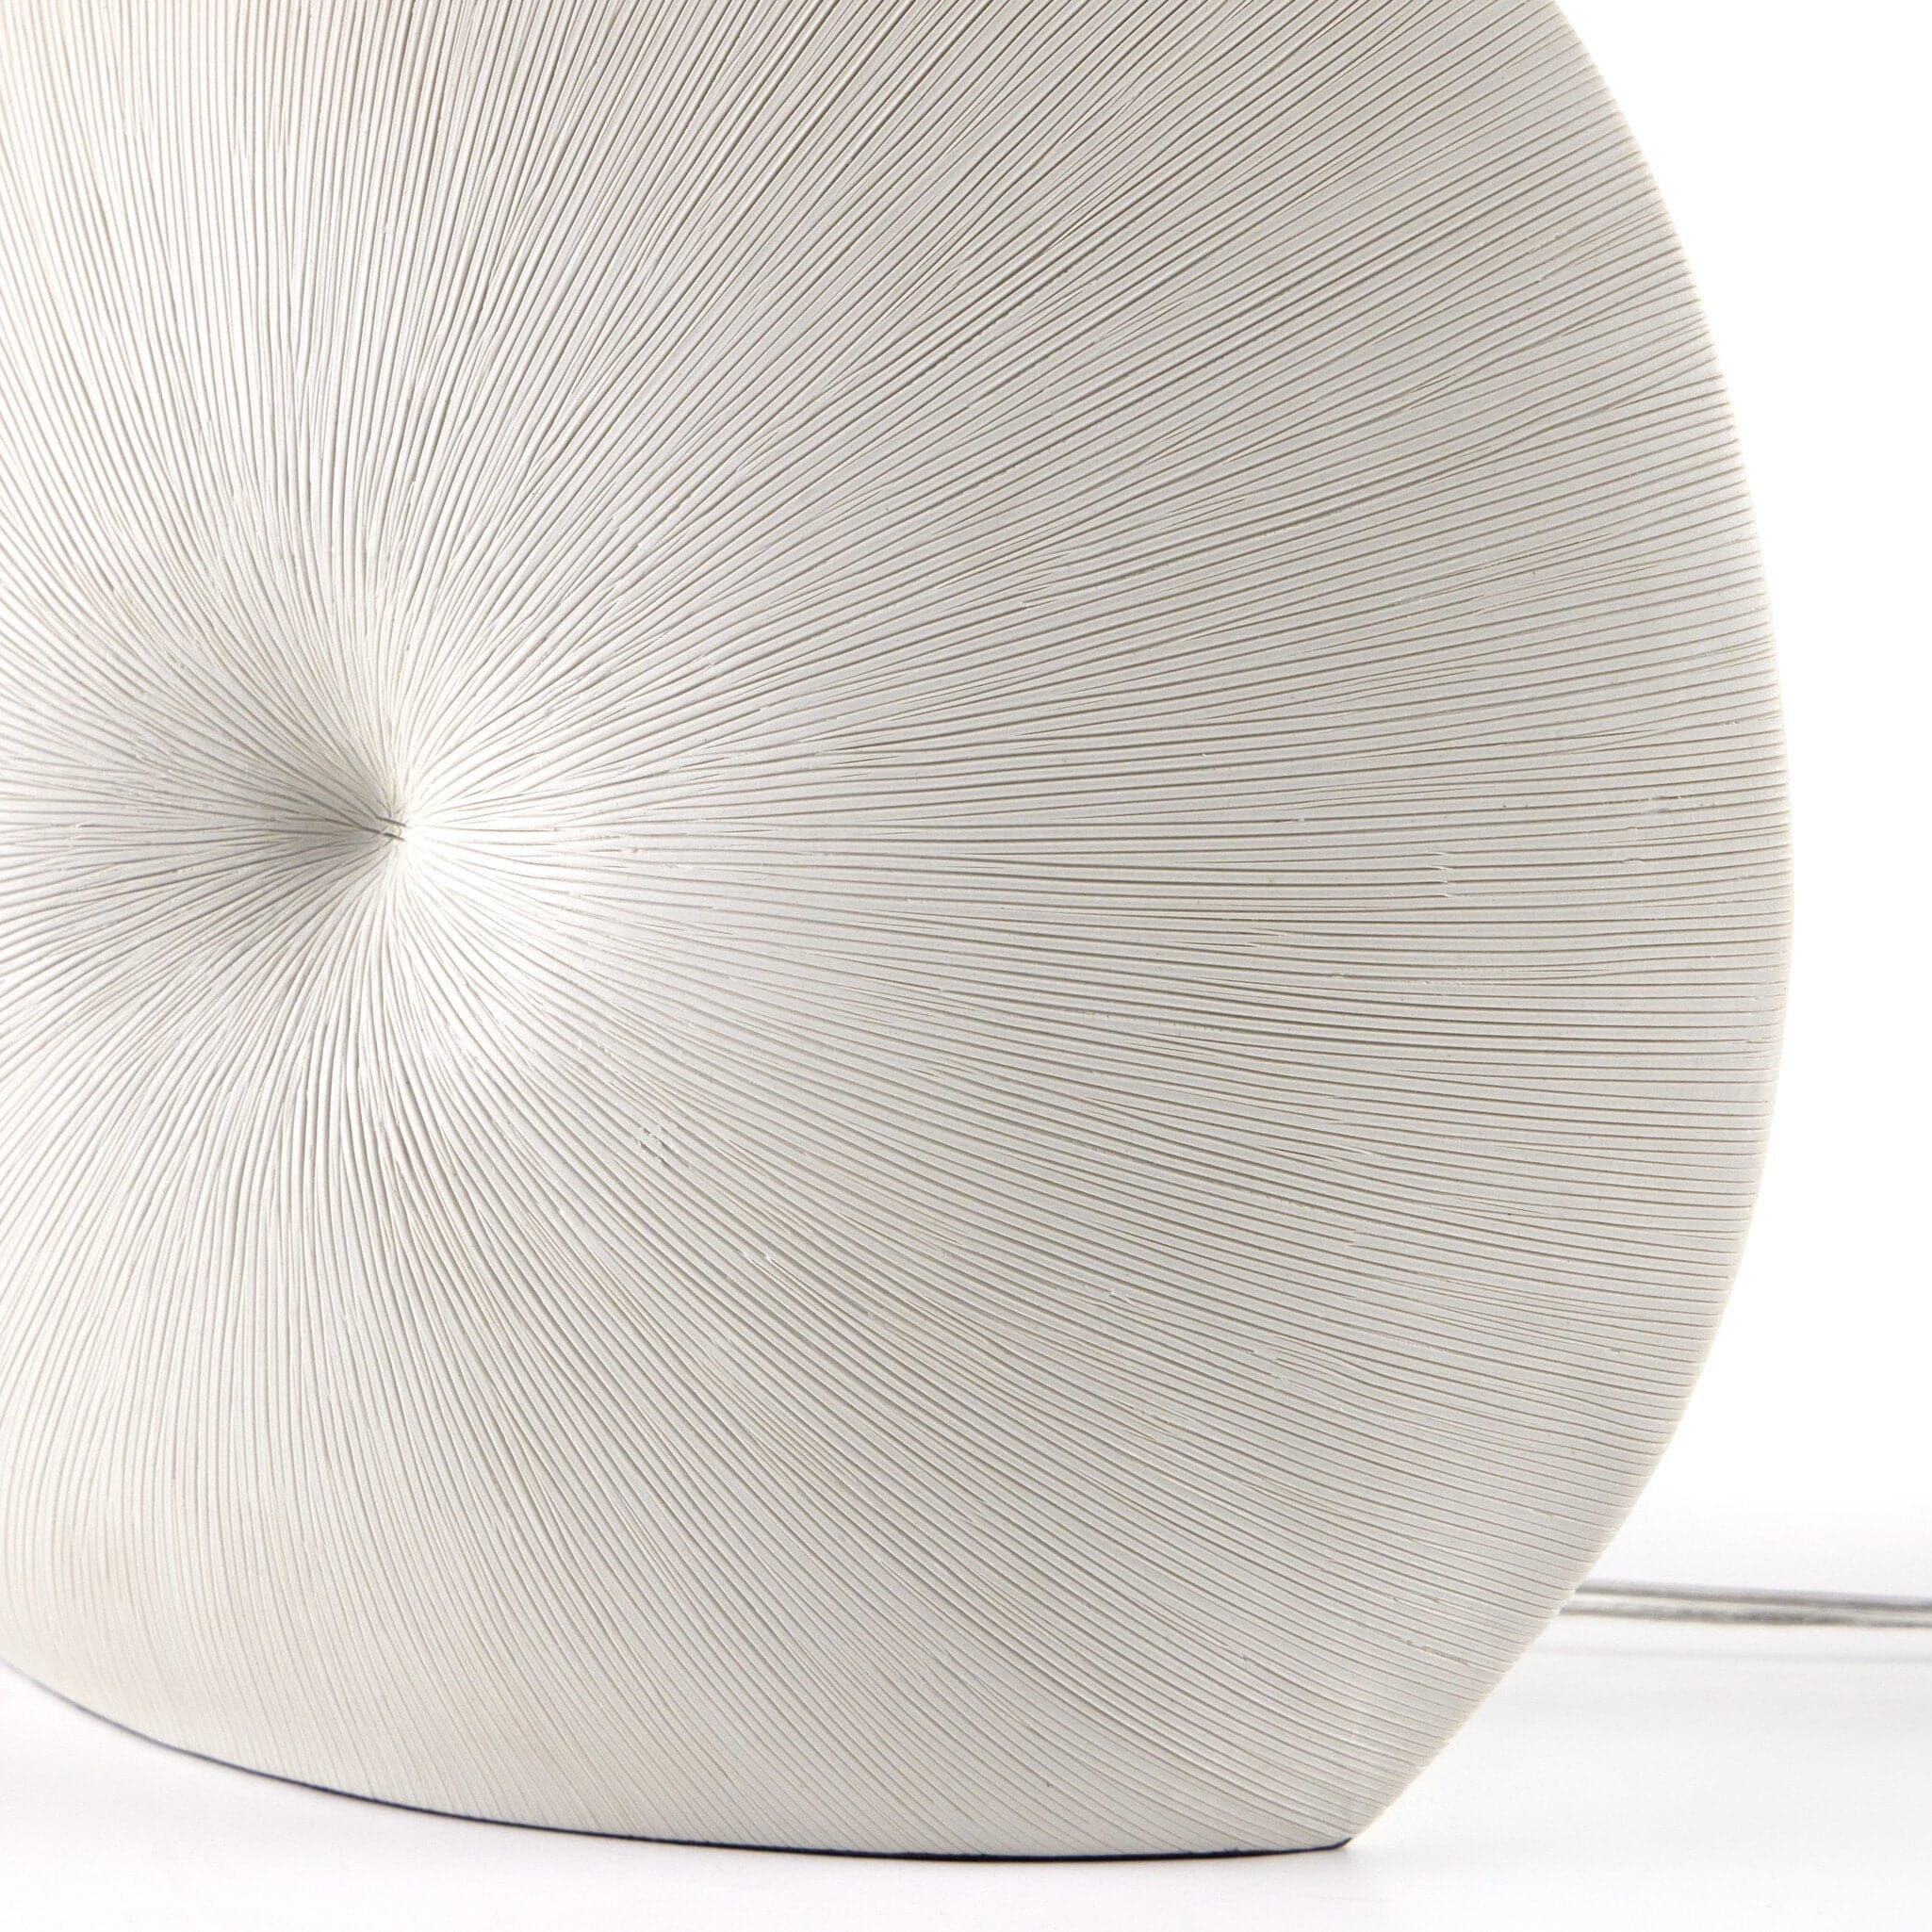 Busaba Table Lamp - Textured Matte White Porcelain Ceramic